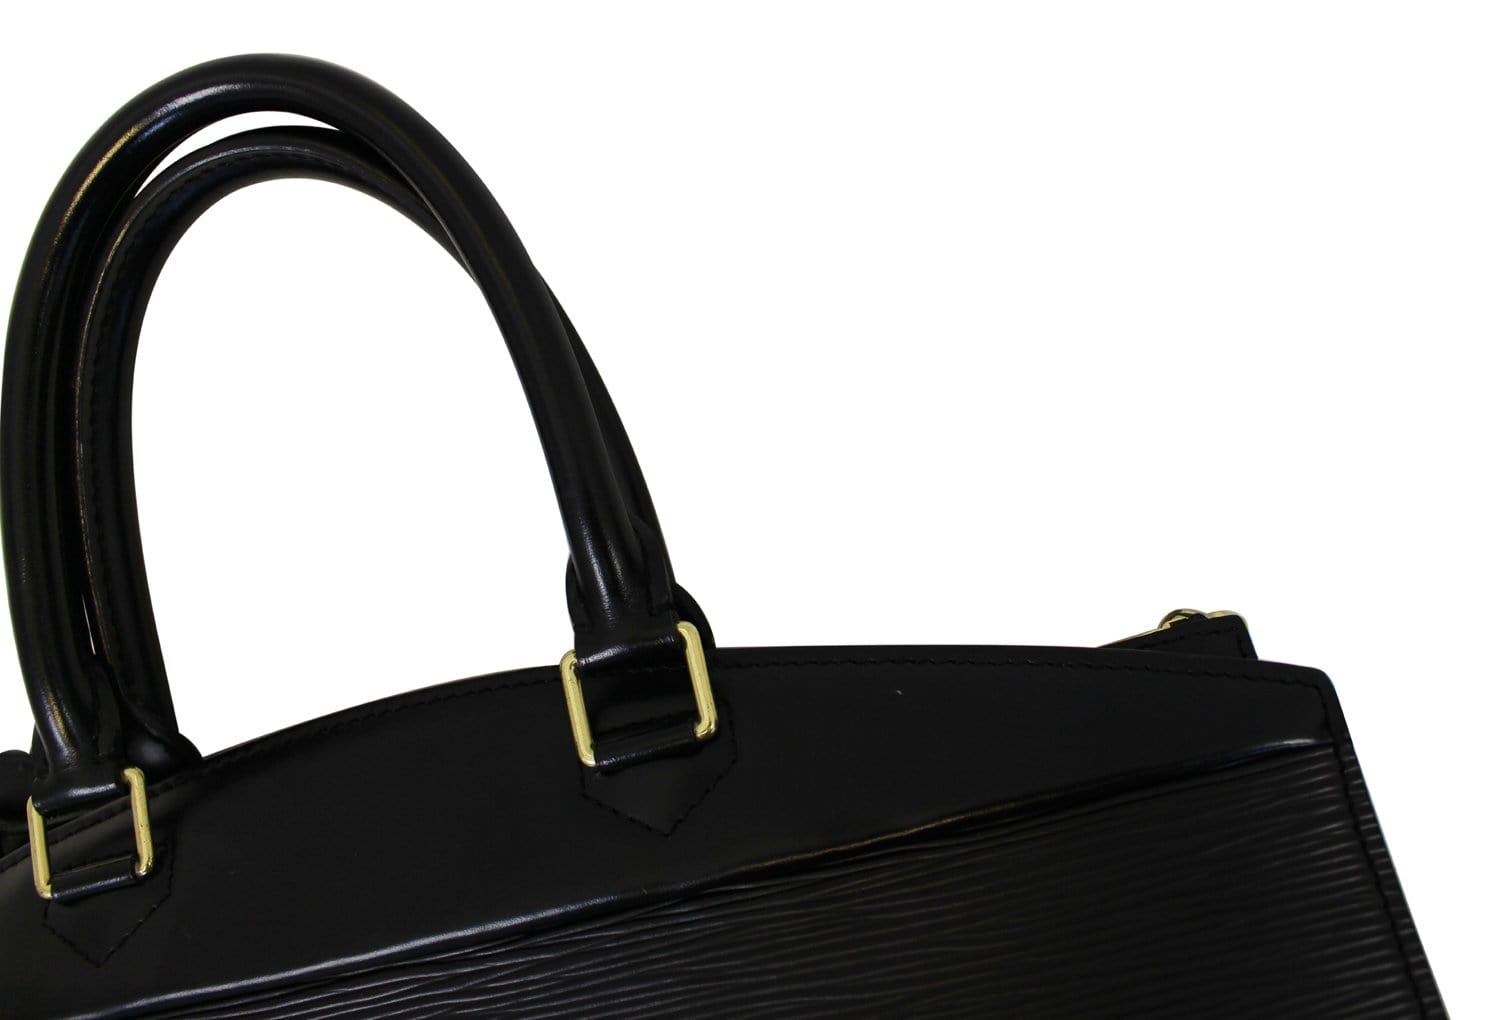 Shop for Louis Vuitton Black Epi Leather Riviera Handbag - Shipped